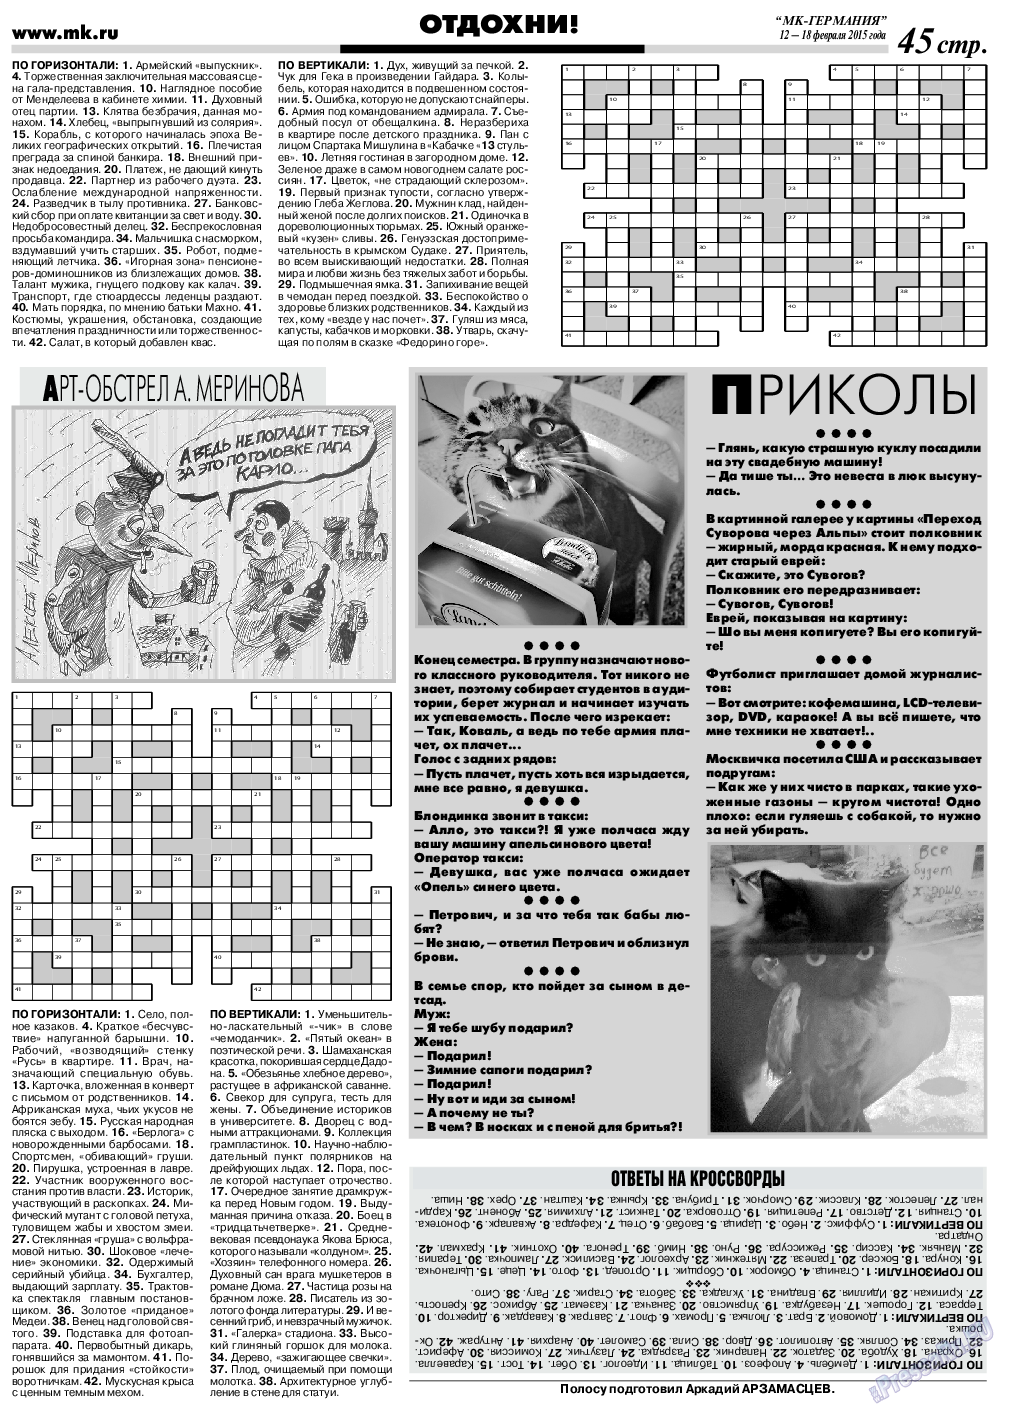 МК-Германия, газета. 2015 №7 стр.45